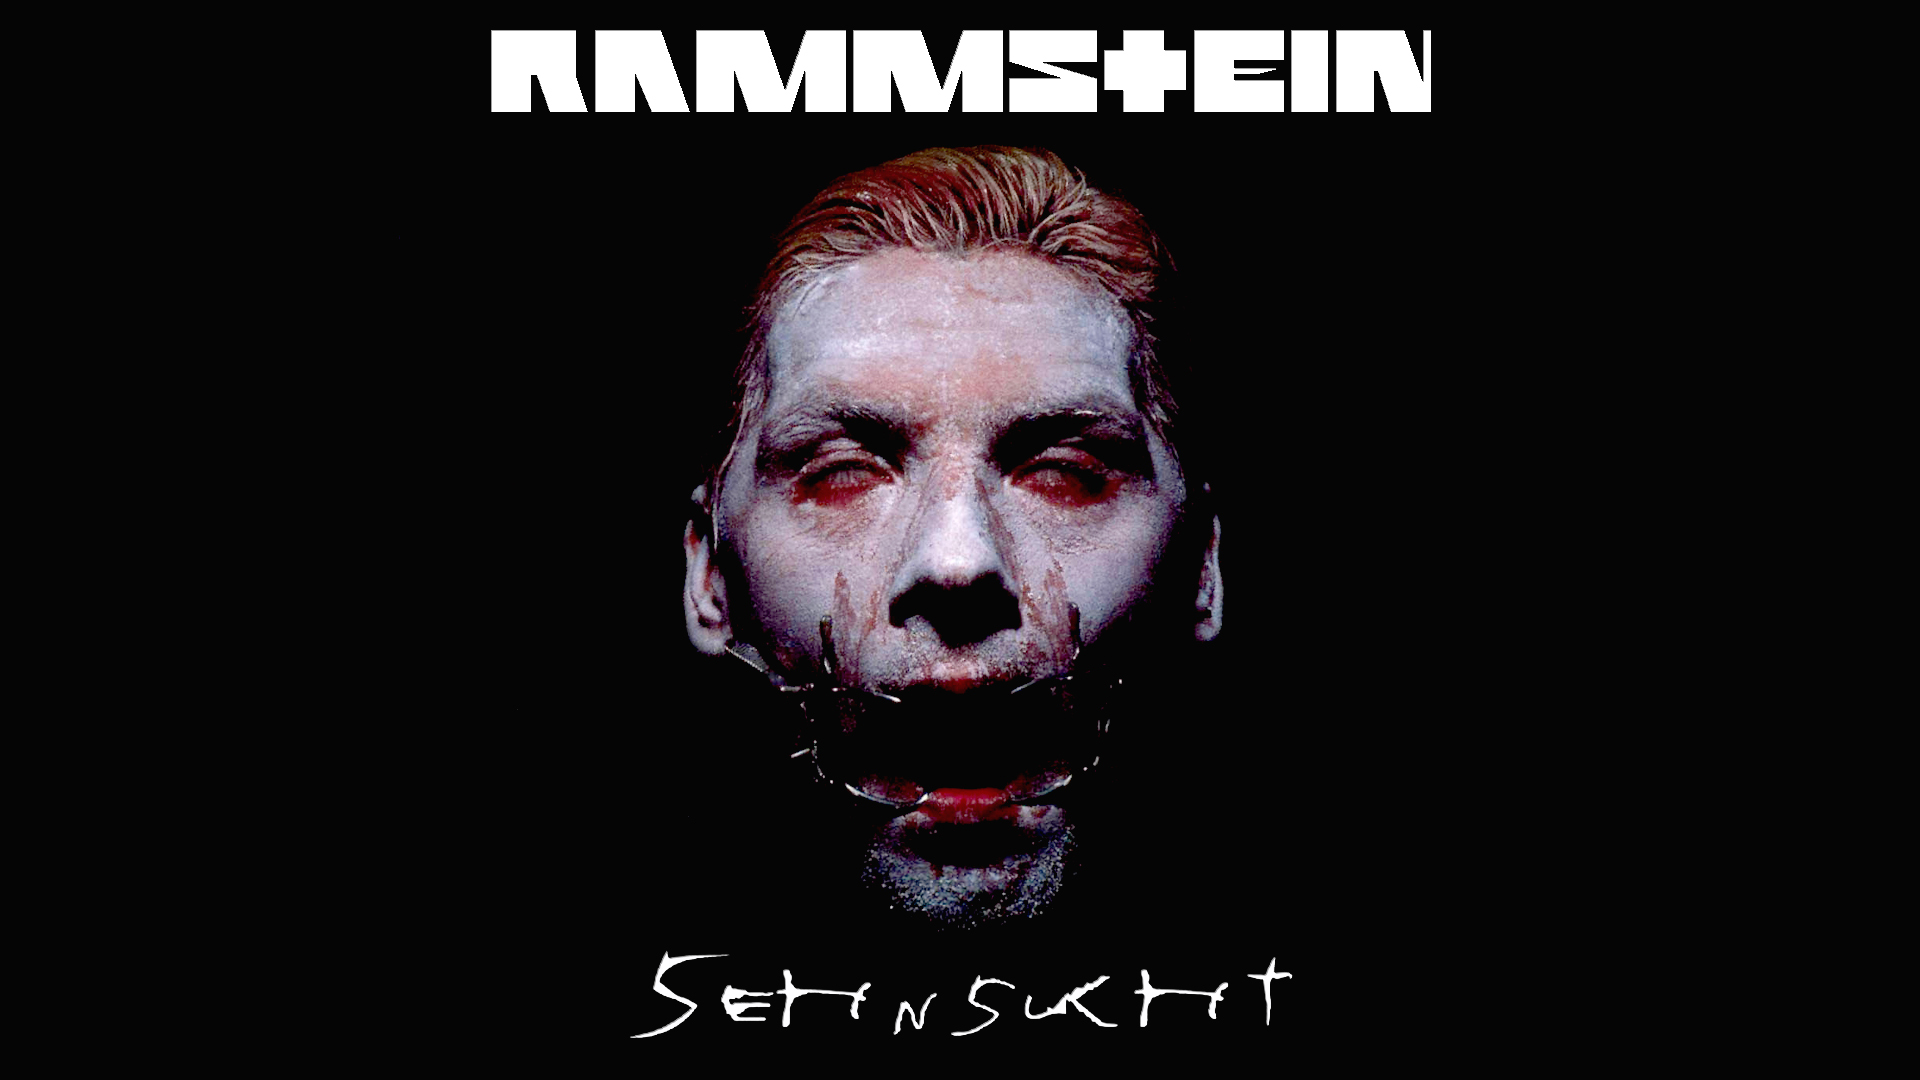 rammstein, music, germany